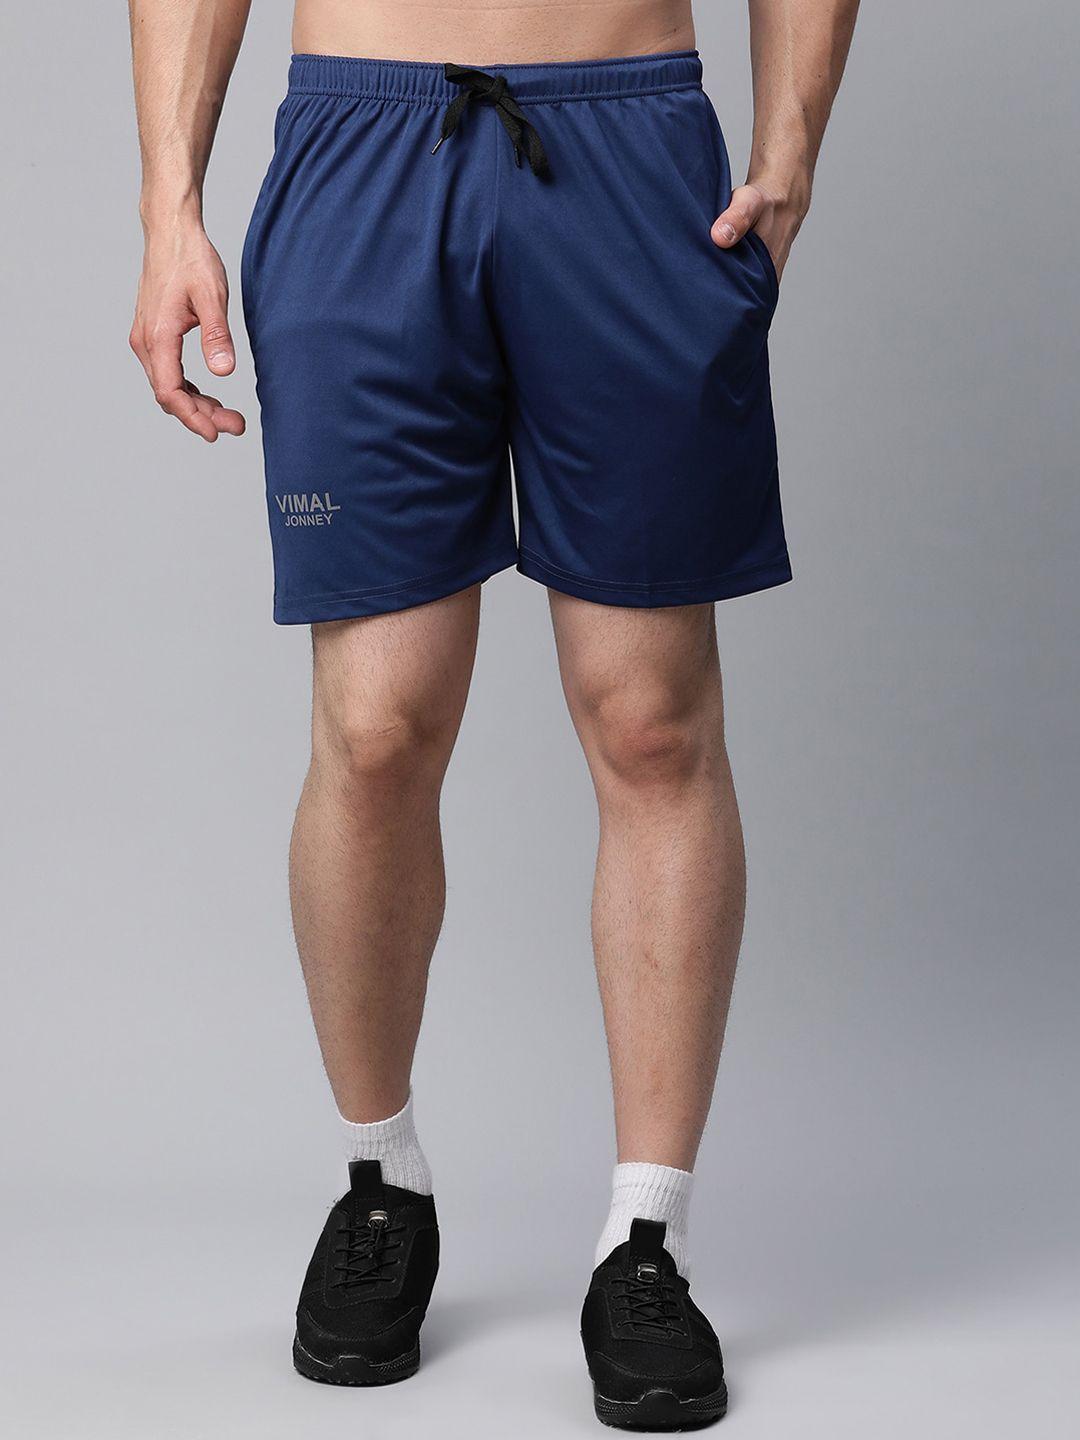 vimal jonney men blue training or gym sports shorts